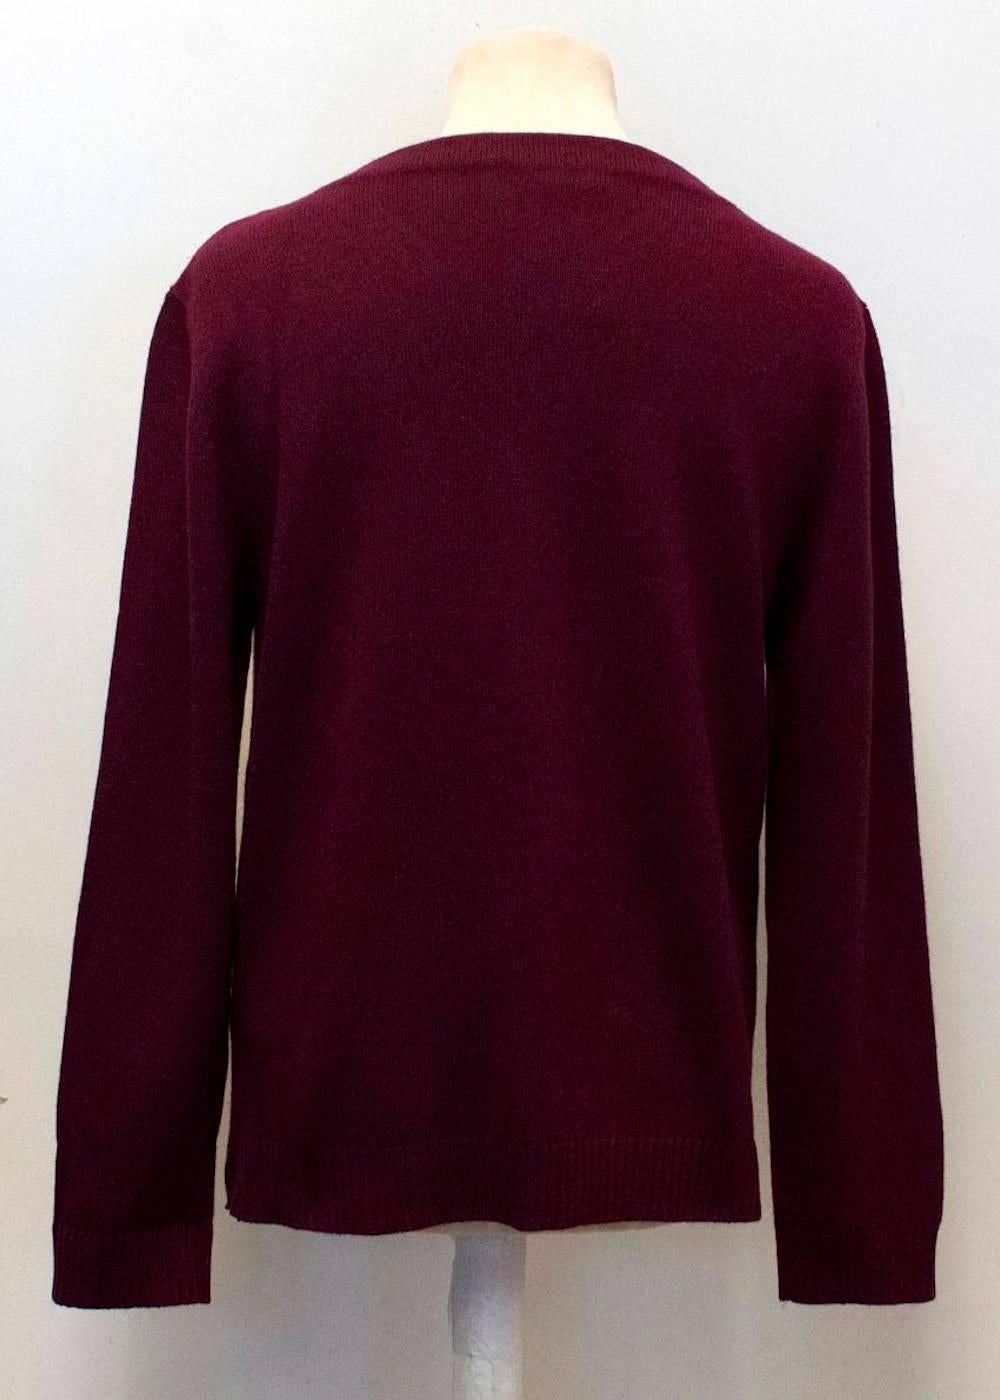 Valentino Men's Burgundy Cashmere Knitted Jumper  For Sale 3